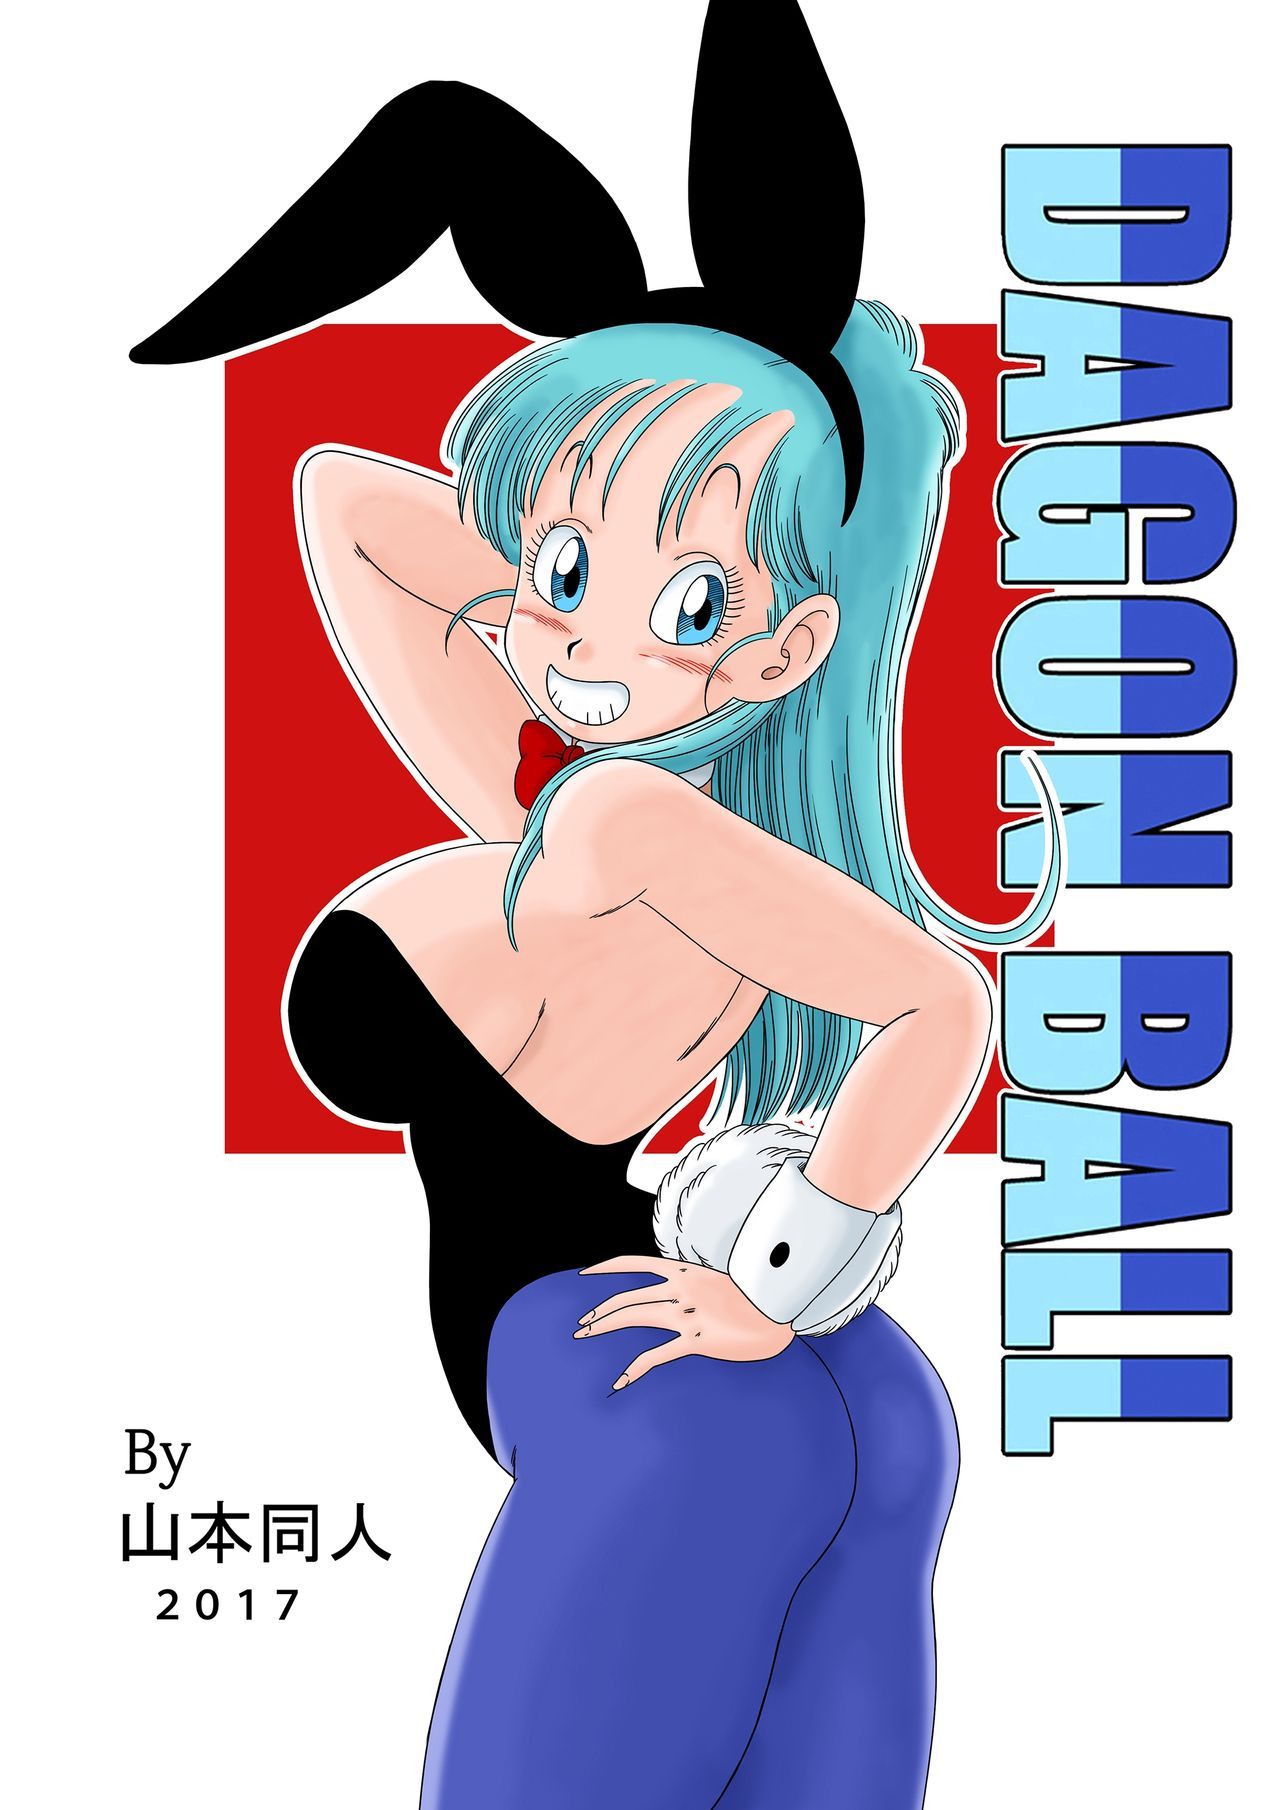 Bunny Girl Transformation - 22